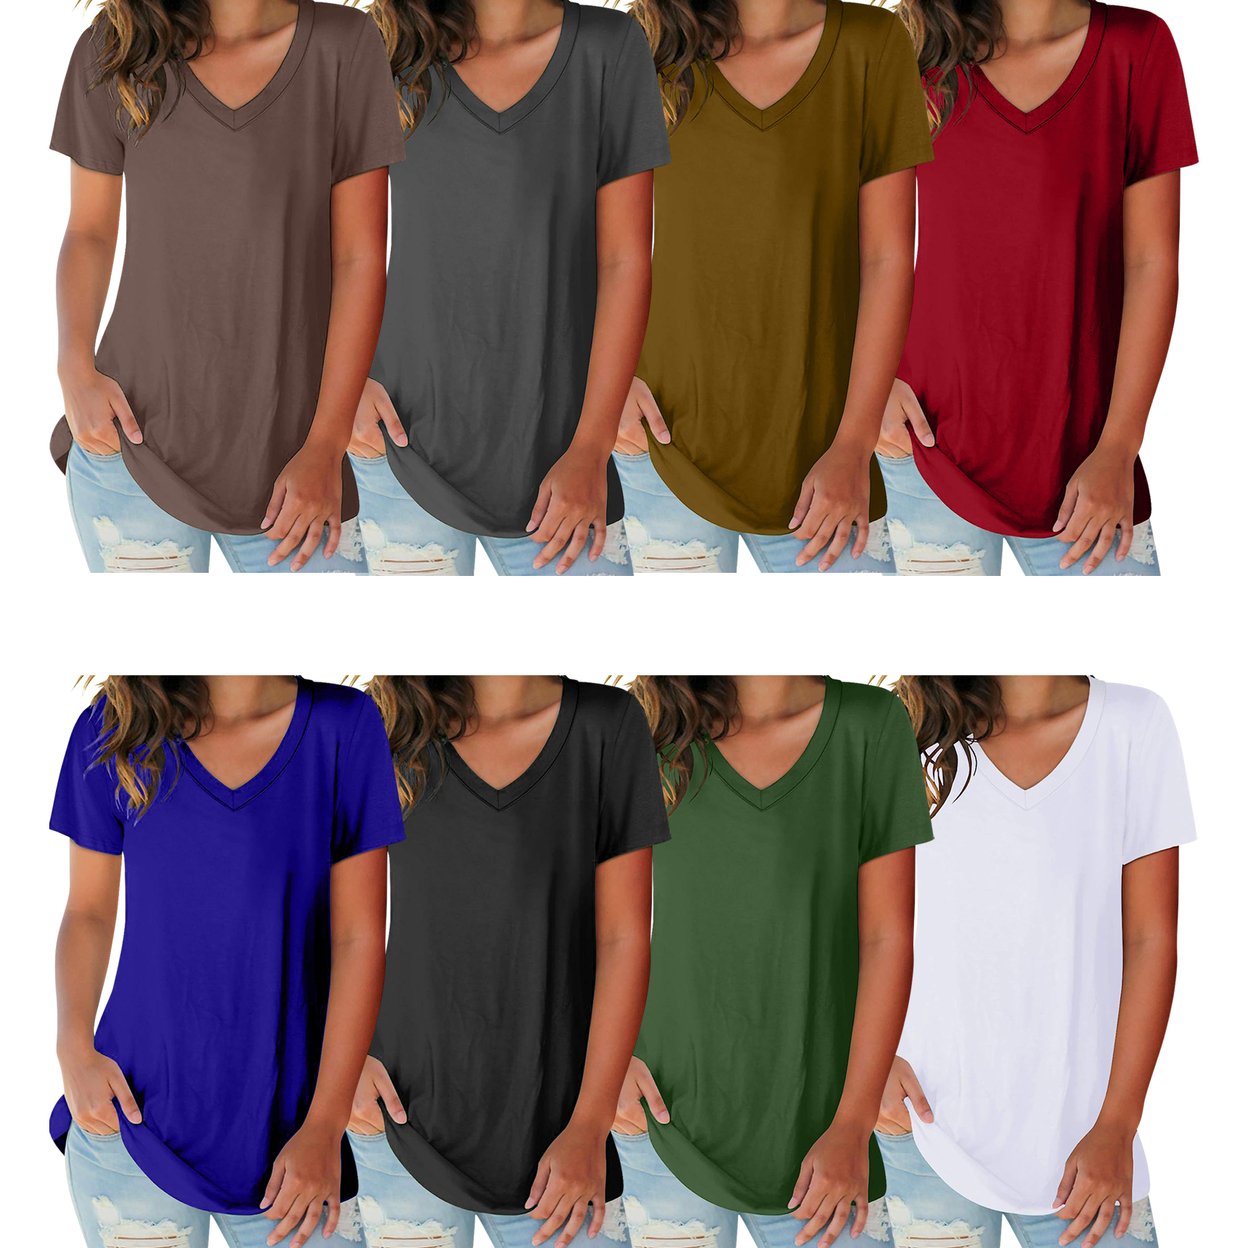 3-Pack: Women's Ultra Soft Smooth Cotton Blend Basic V-Neck Short Sleeve Shirts - Black, White, Grey, X-large